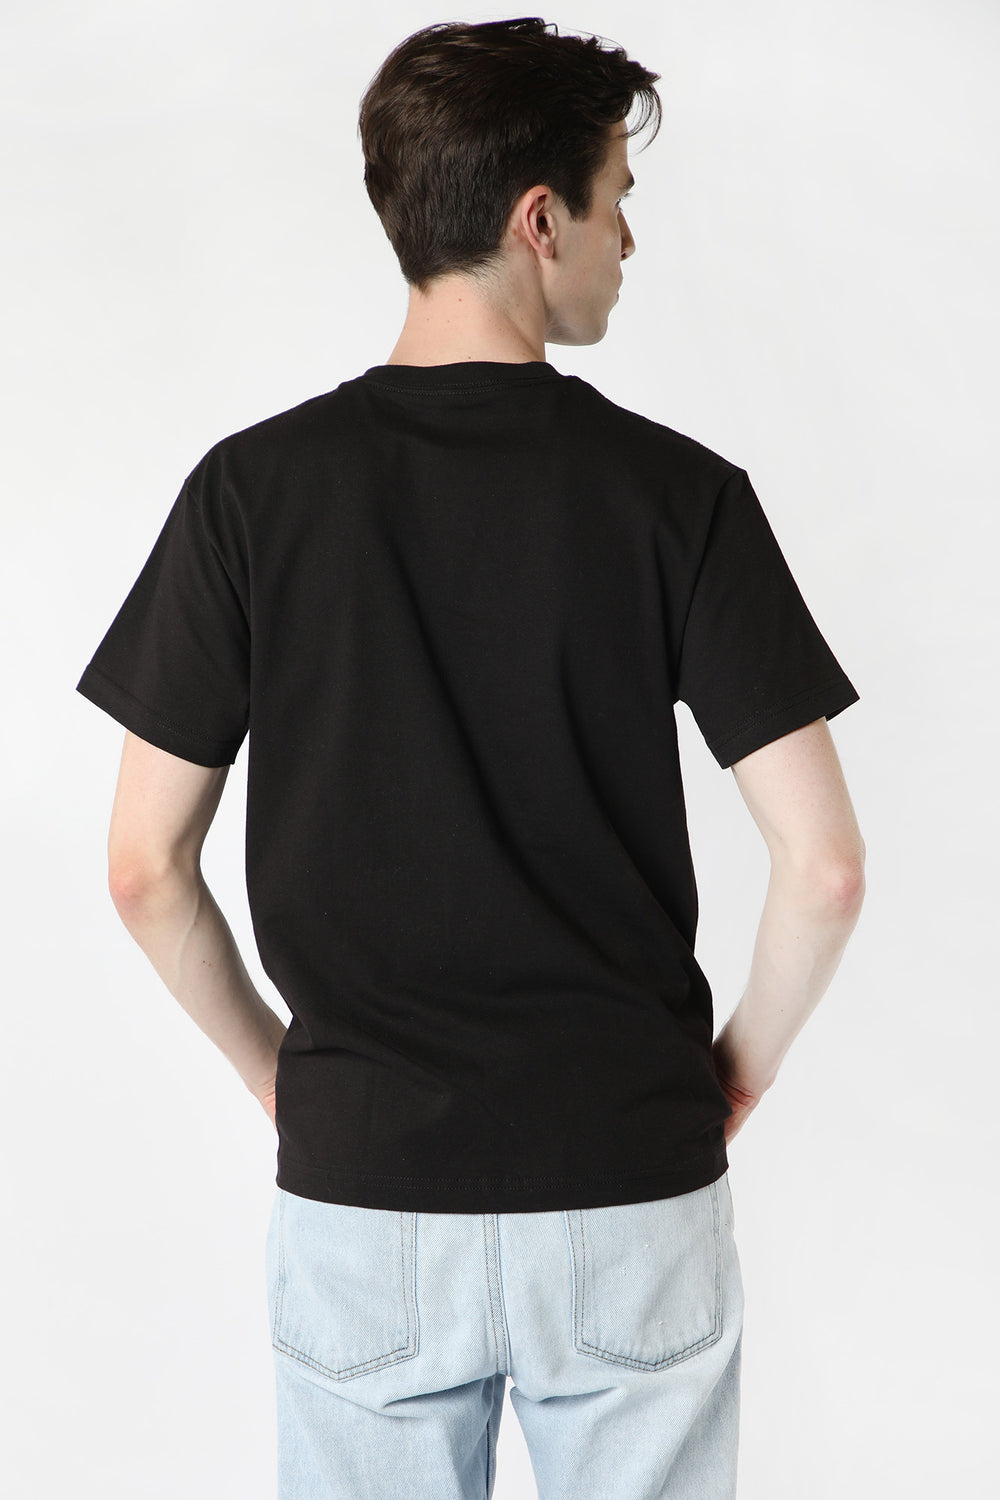 40s & Shorties Luxury Text T-Shirt Black